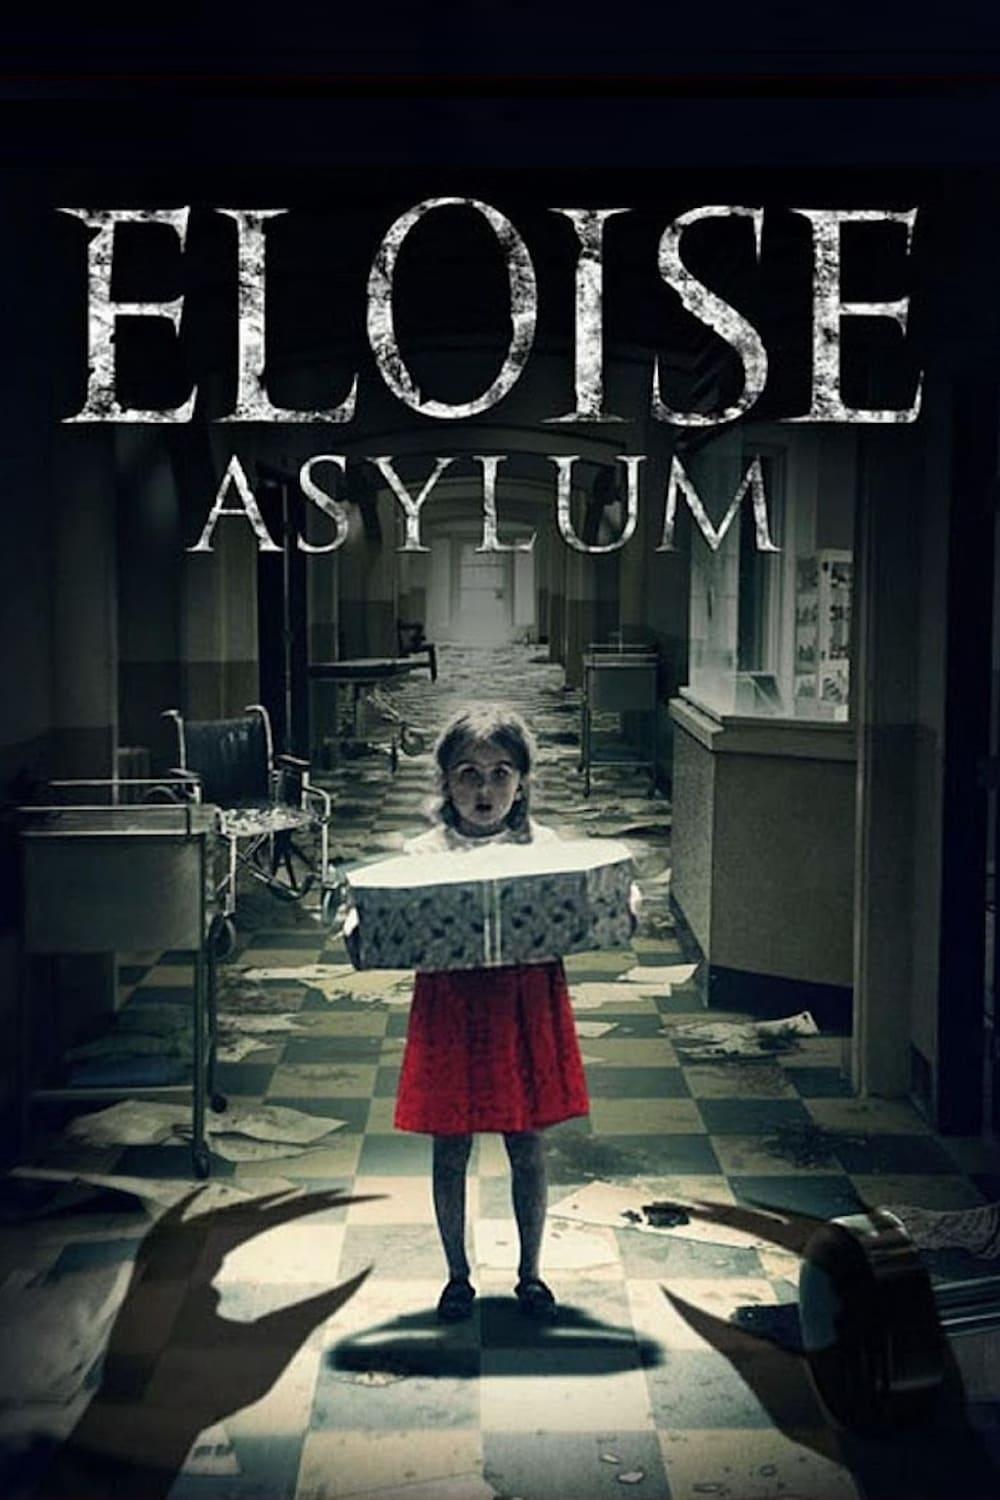 Eloise poster